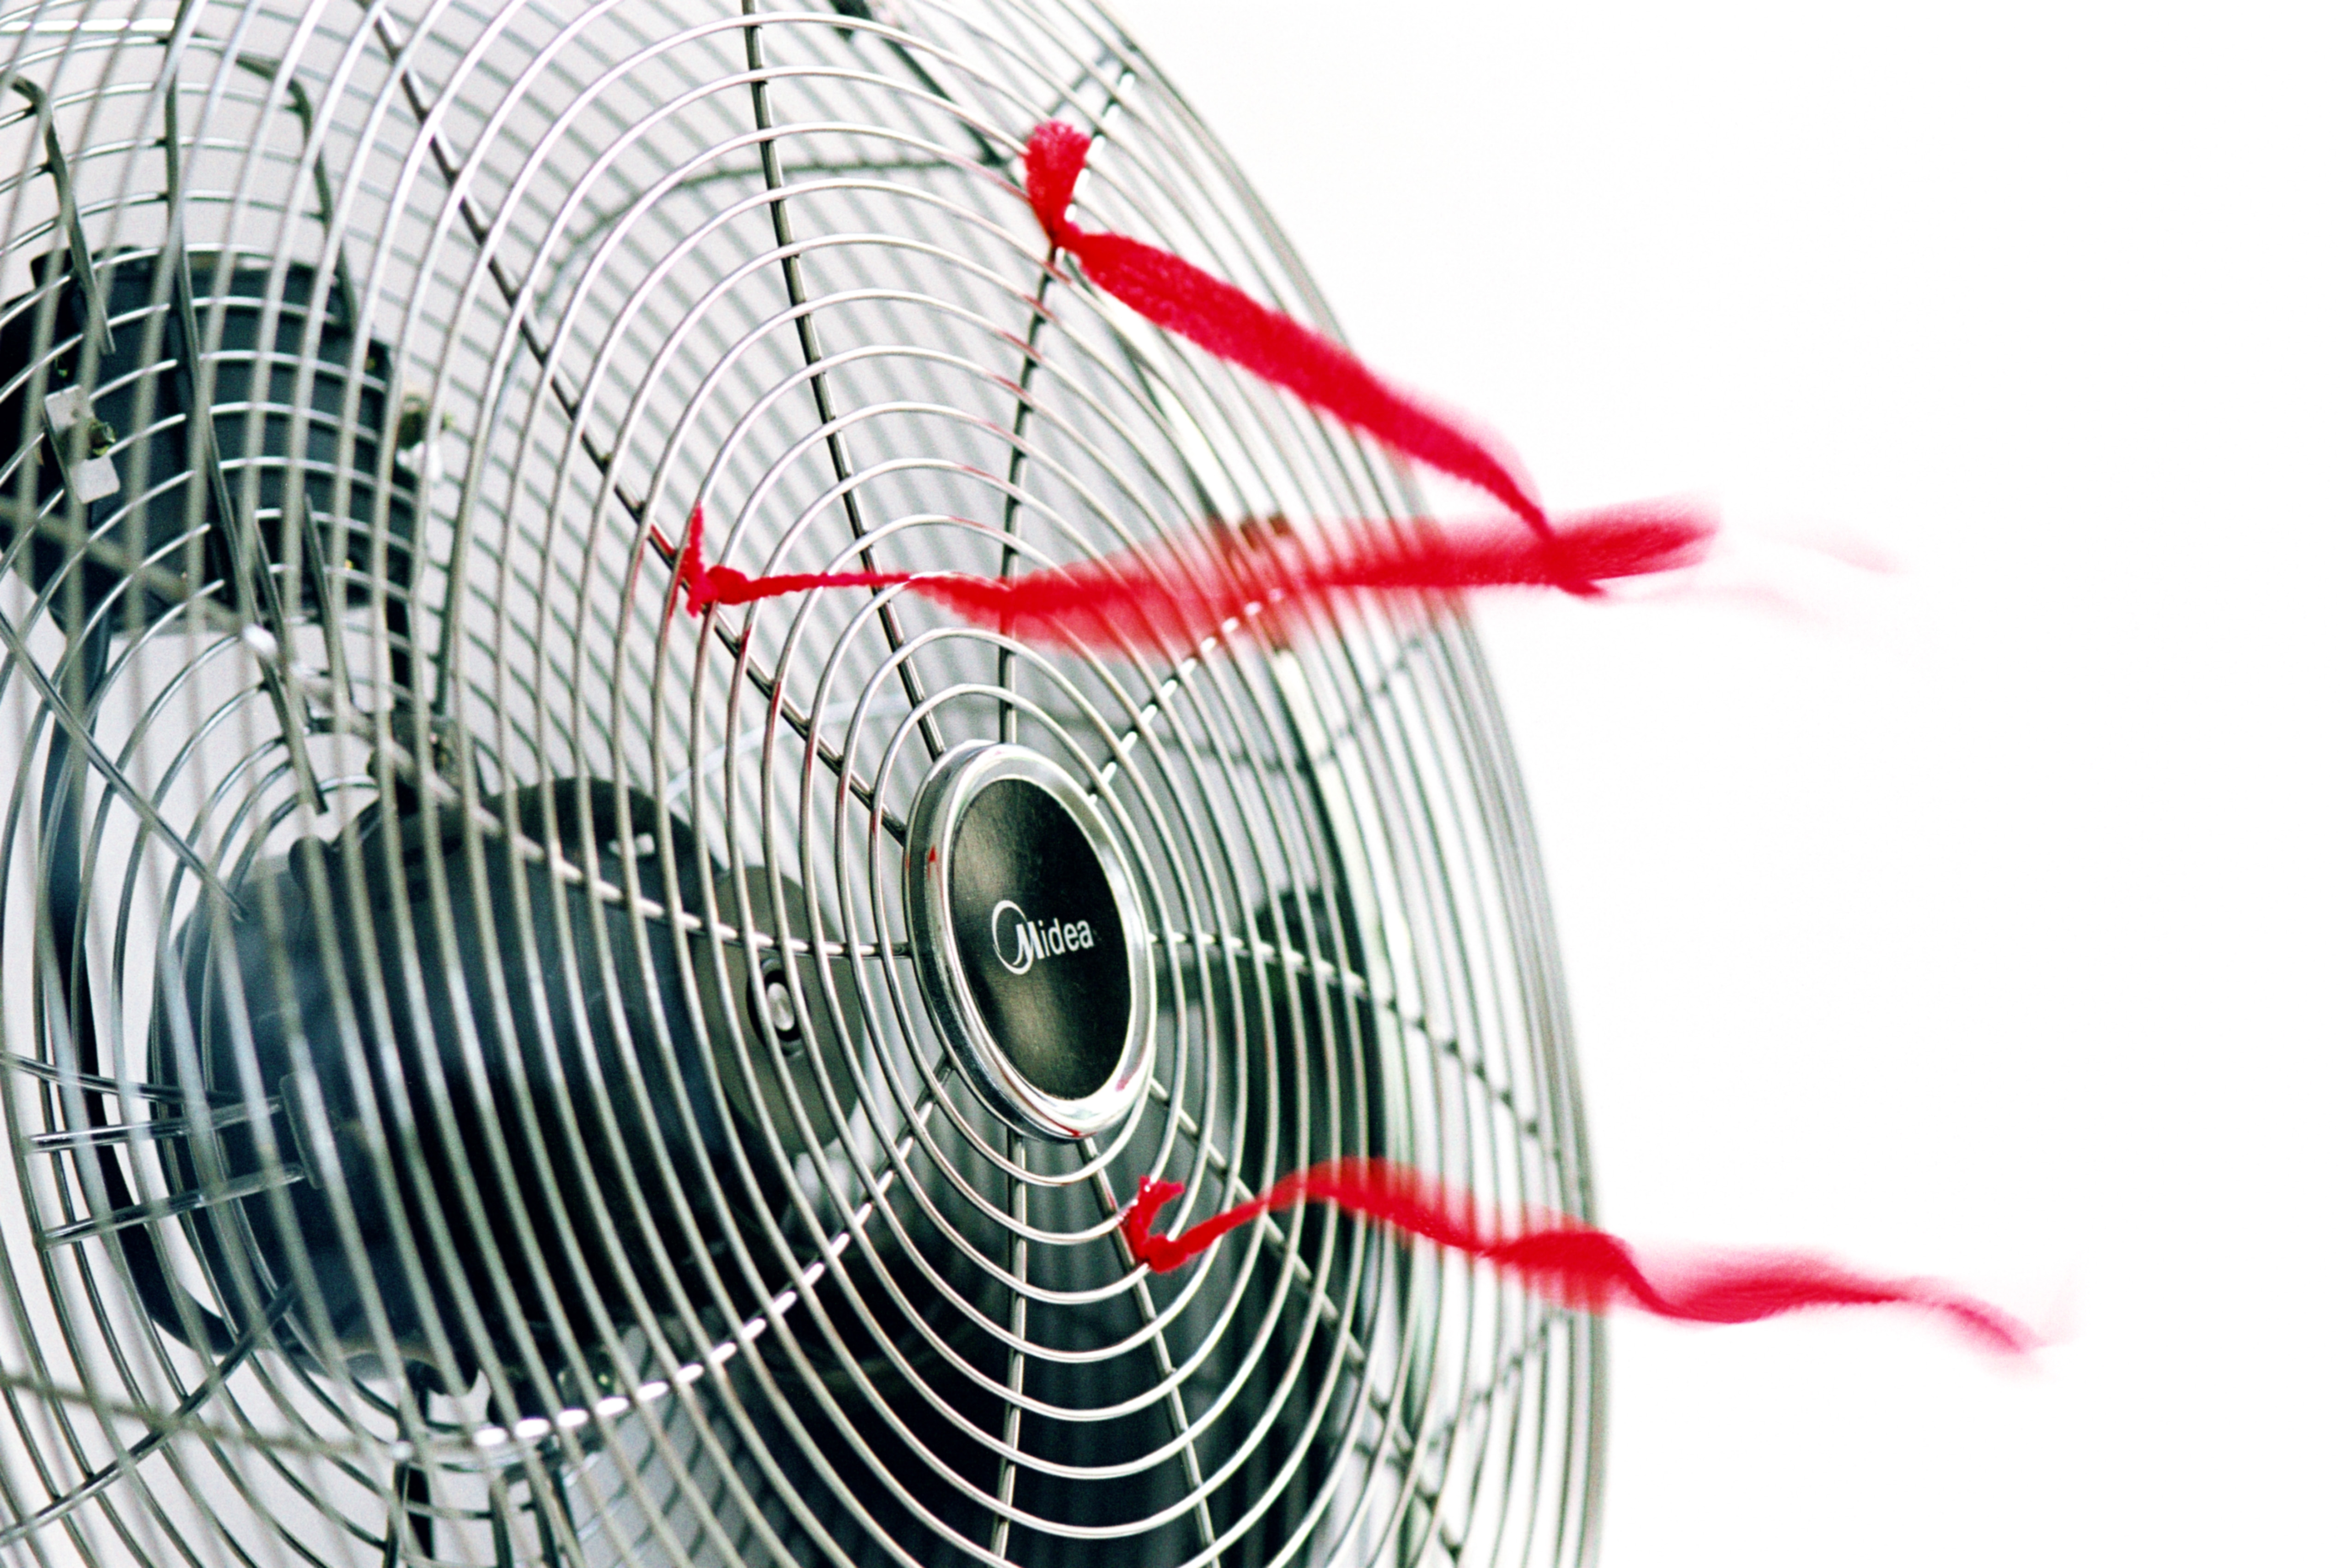 Do fans get rid of hot air?